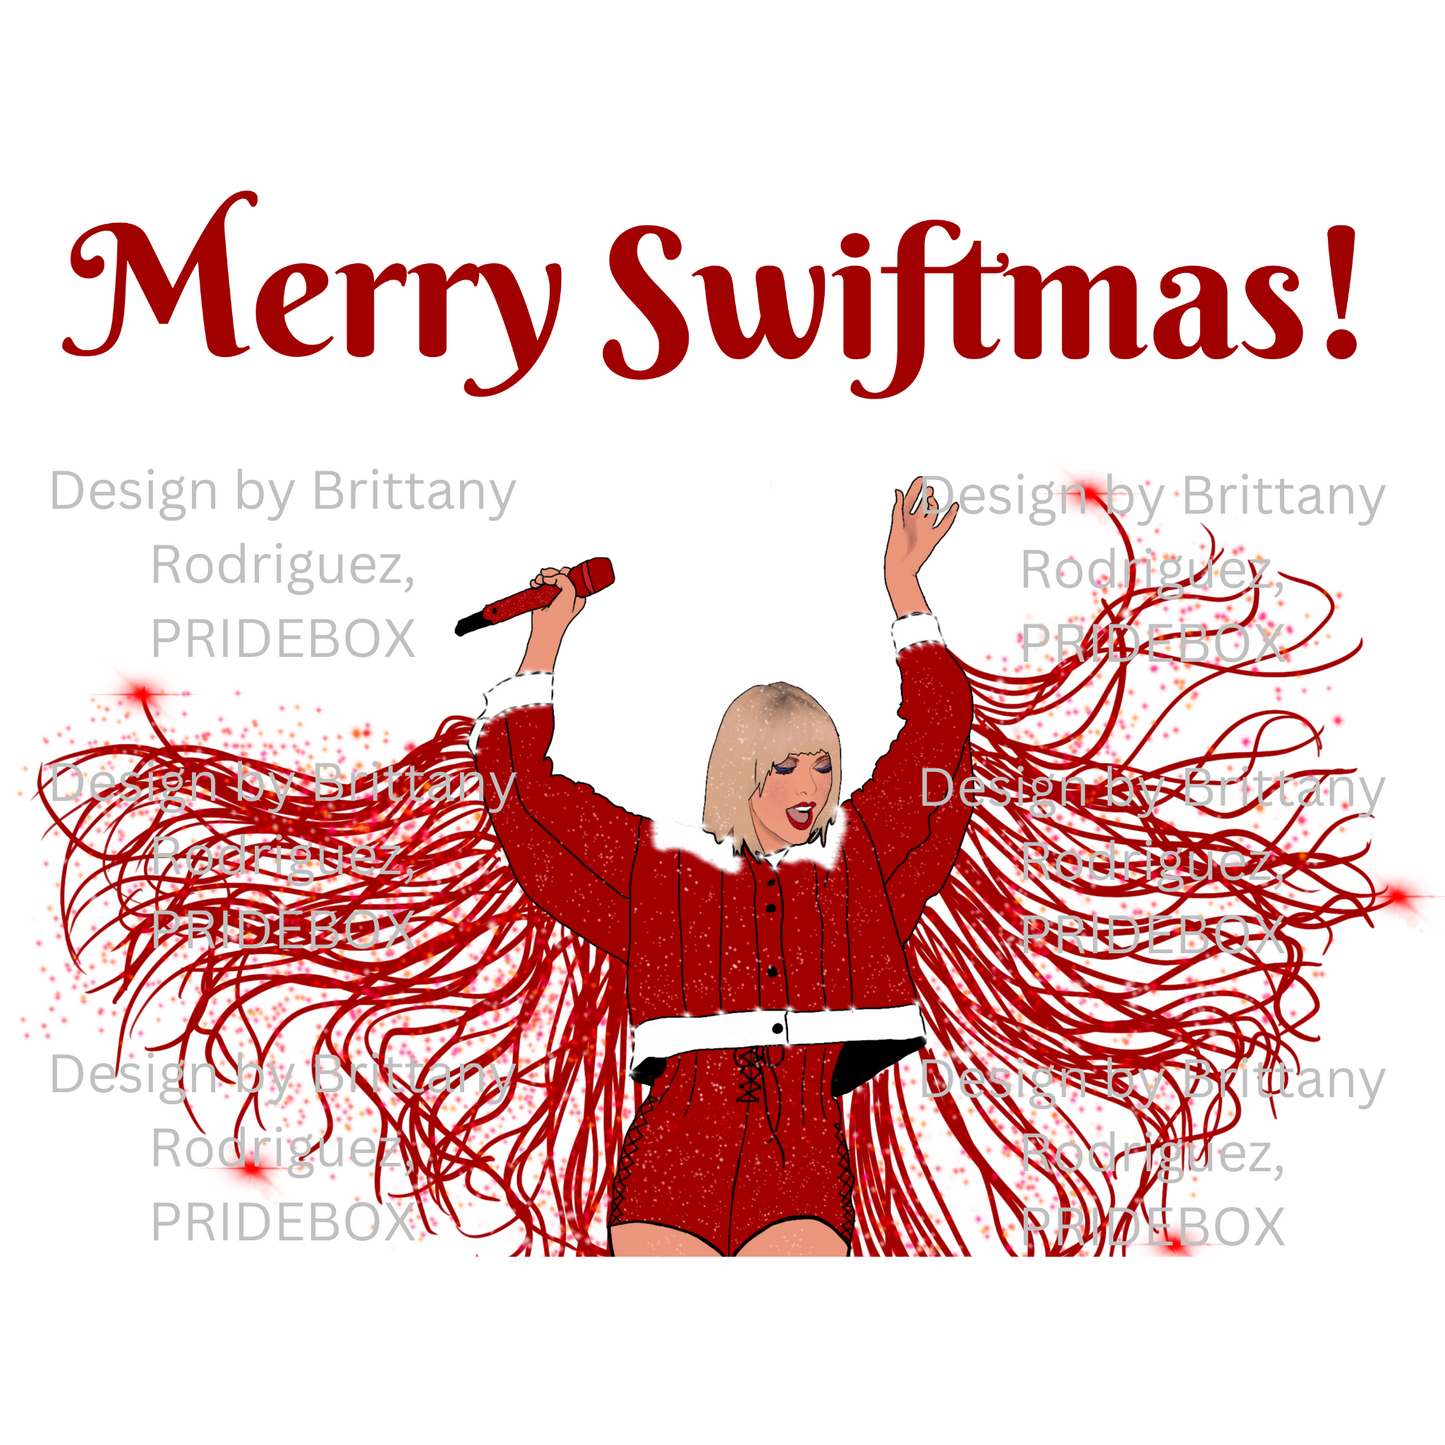 Merry SWIFTmas Card